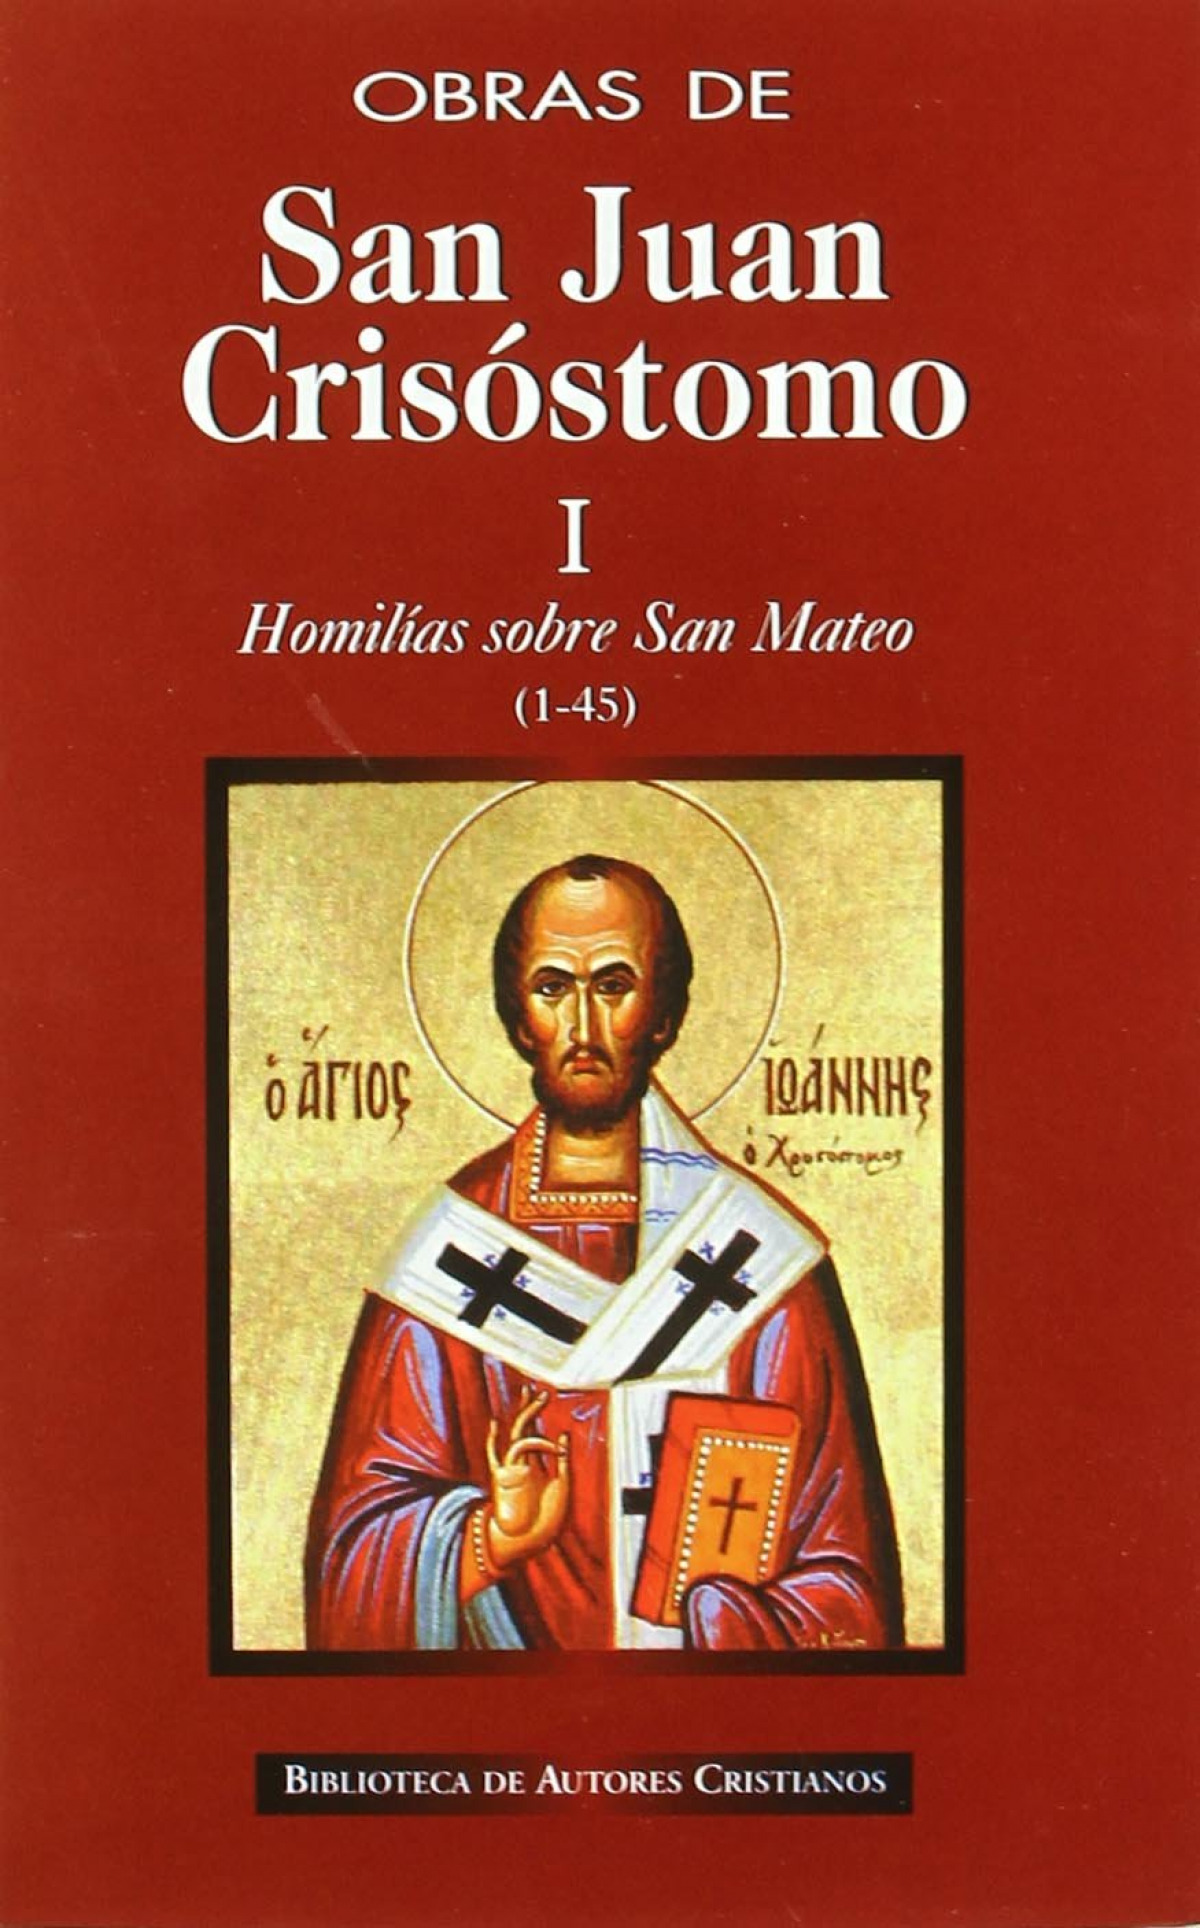 Obras de San Juan Crisóstomo.I: Homilías sobre el Evangelio de San Mat - San Juan Crisóstomo